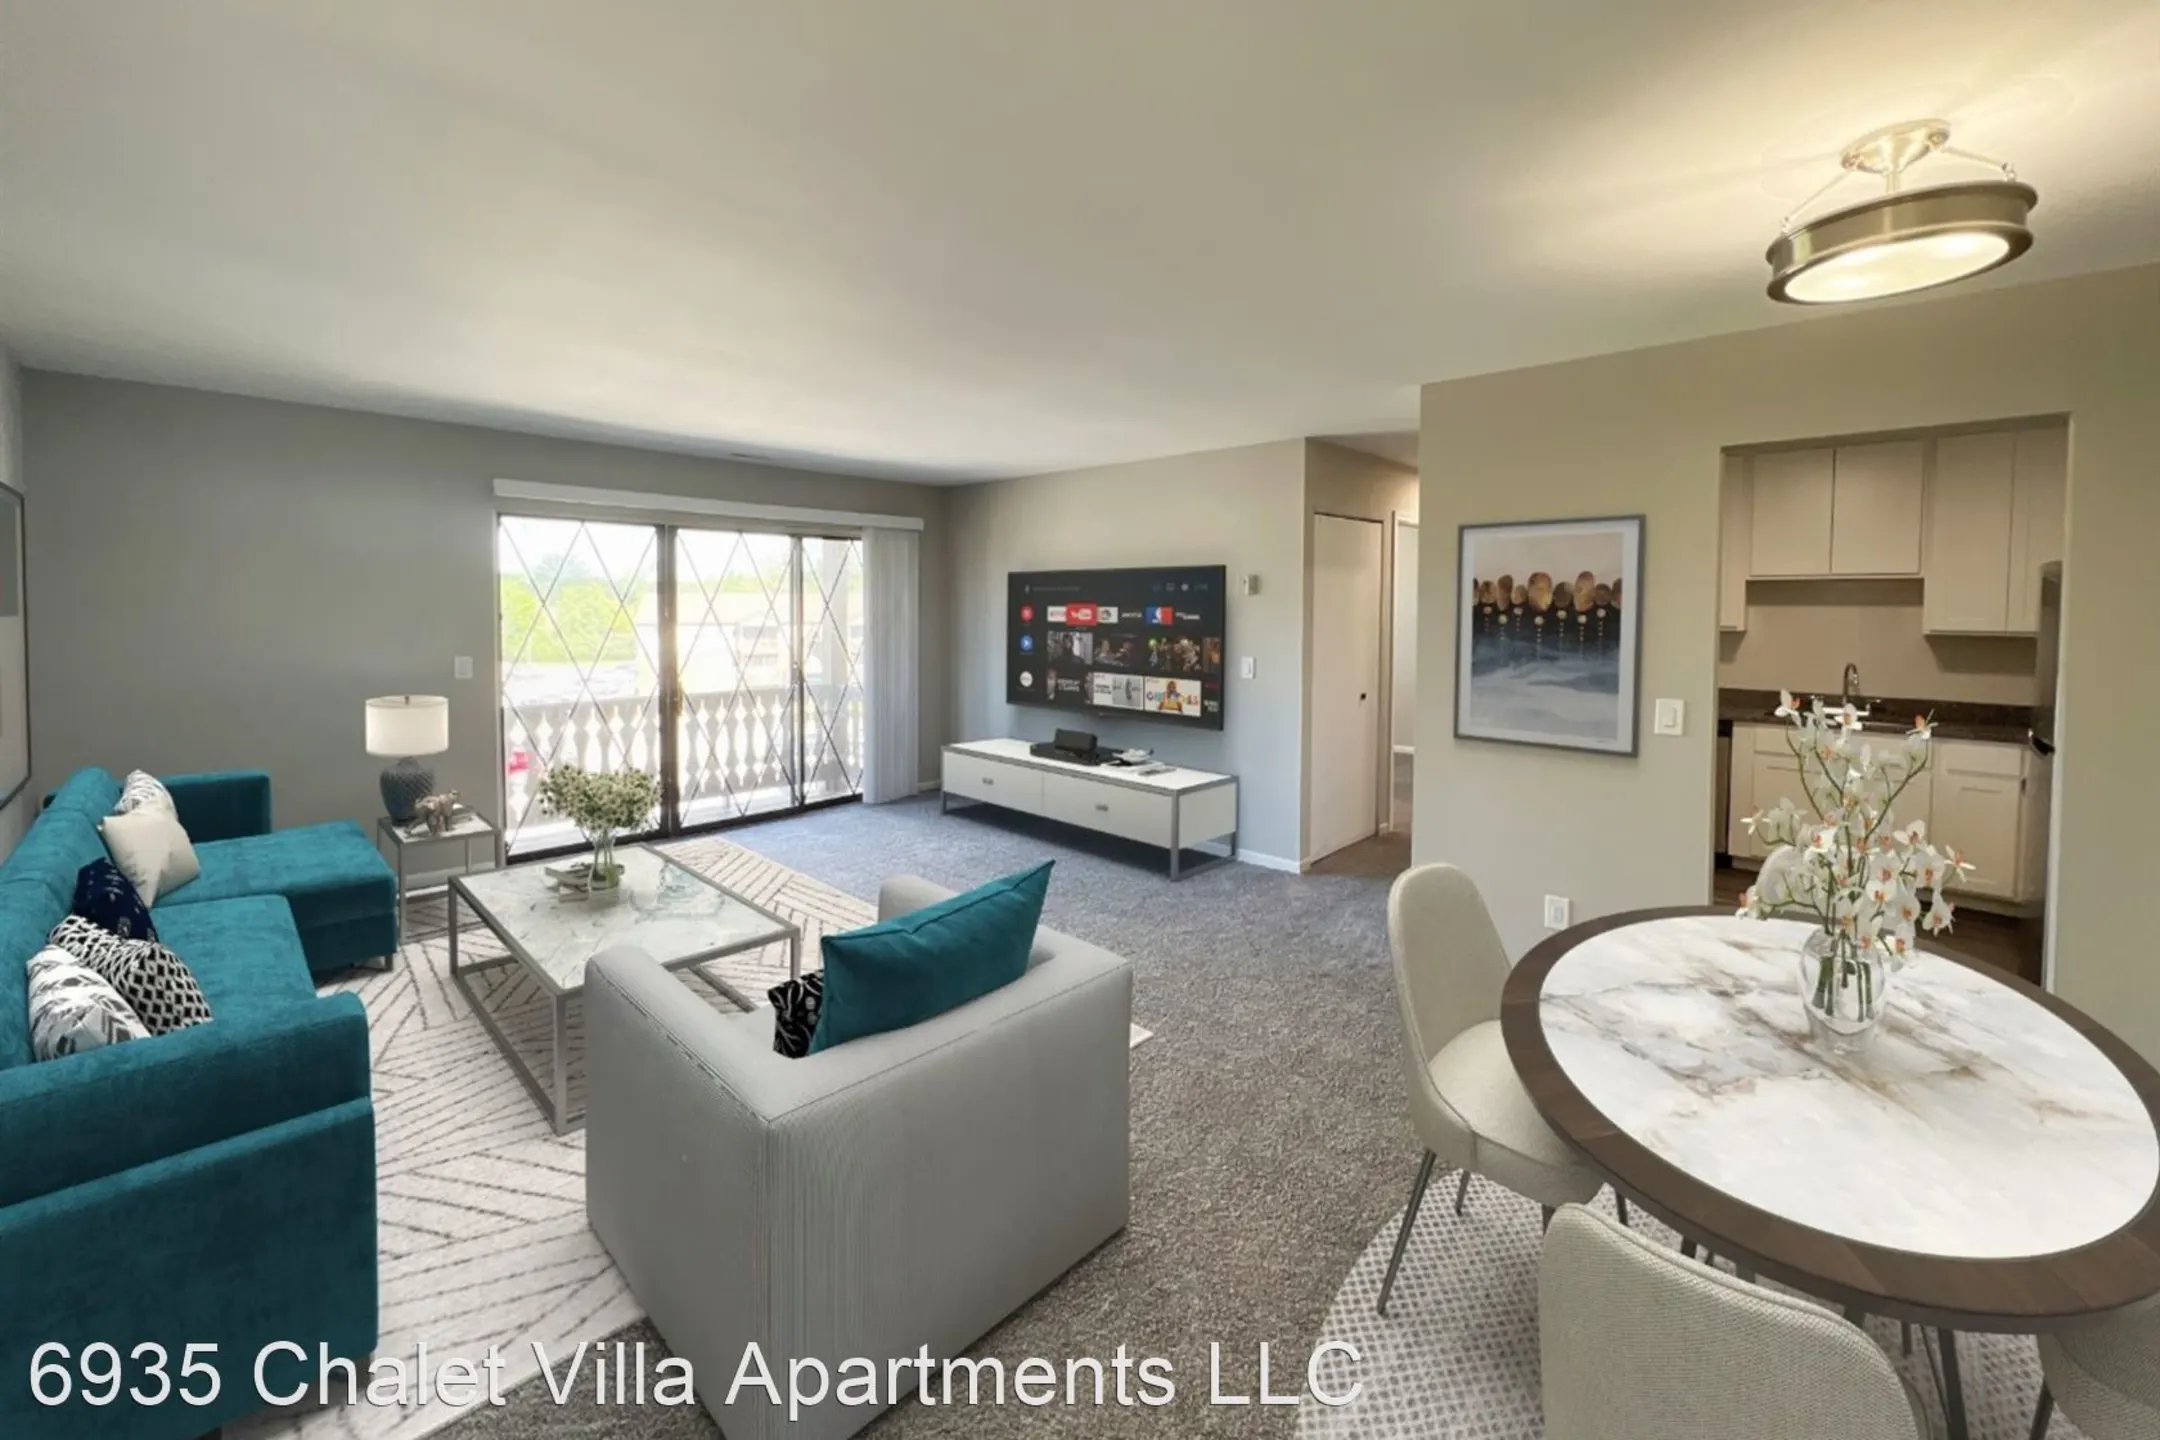 Living Room - Chalet Villa Apartments - Clarkston, MI